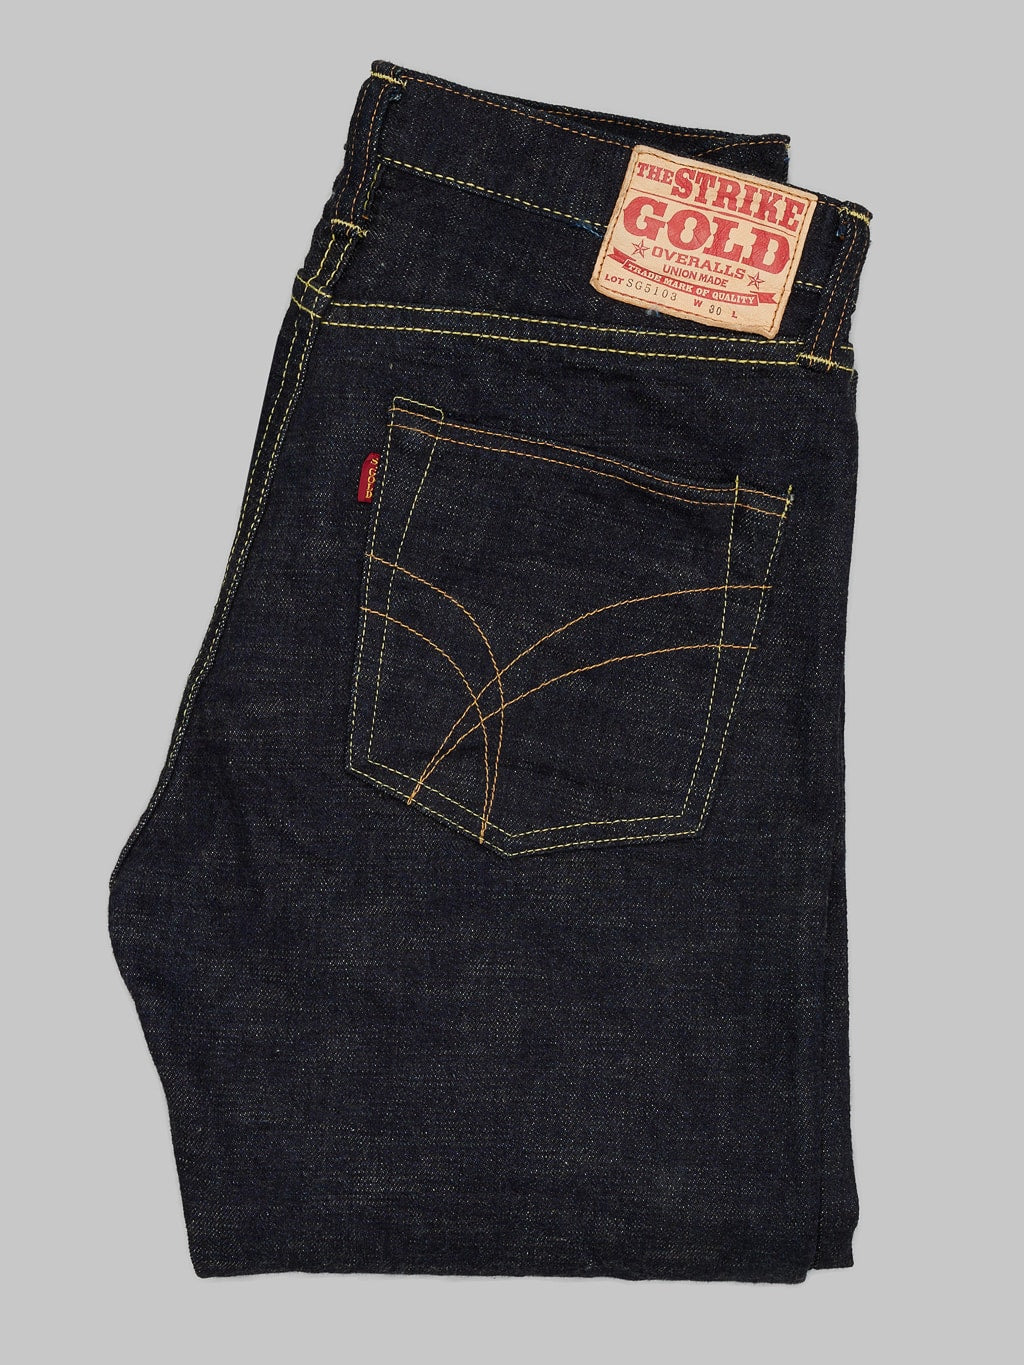 The Strike Gold 5103 Slub regular Straight Jeans made in kojima